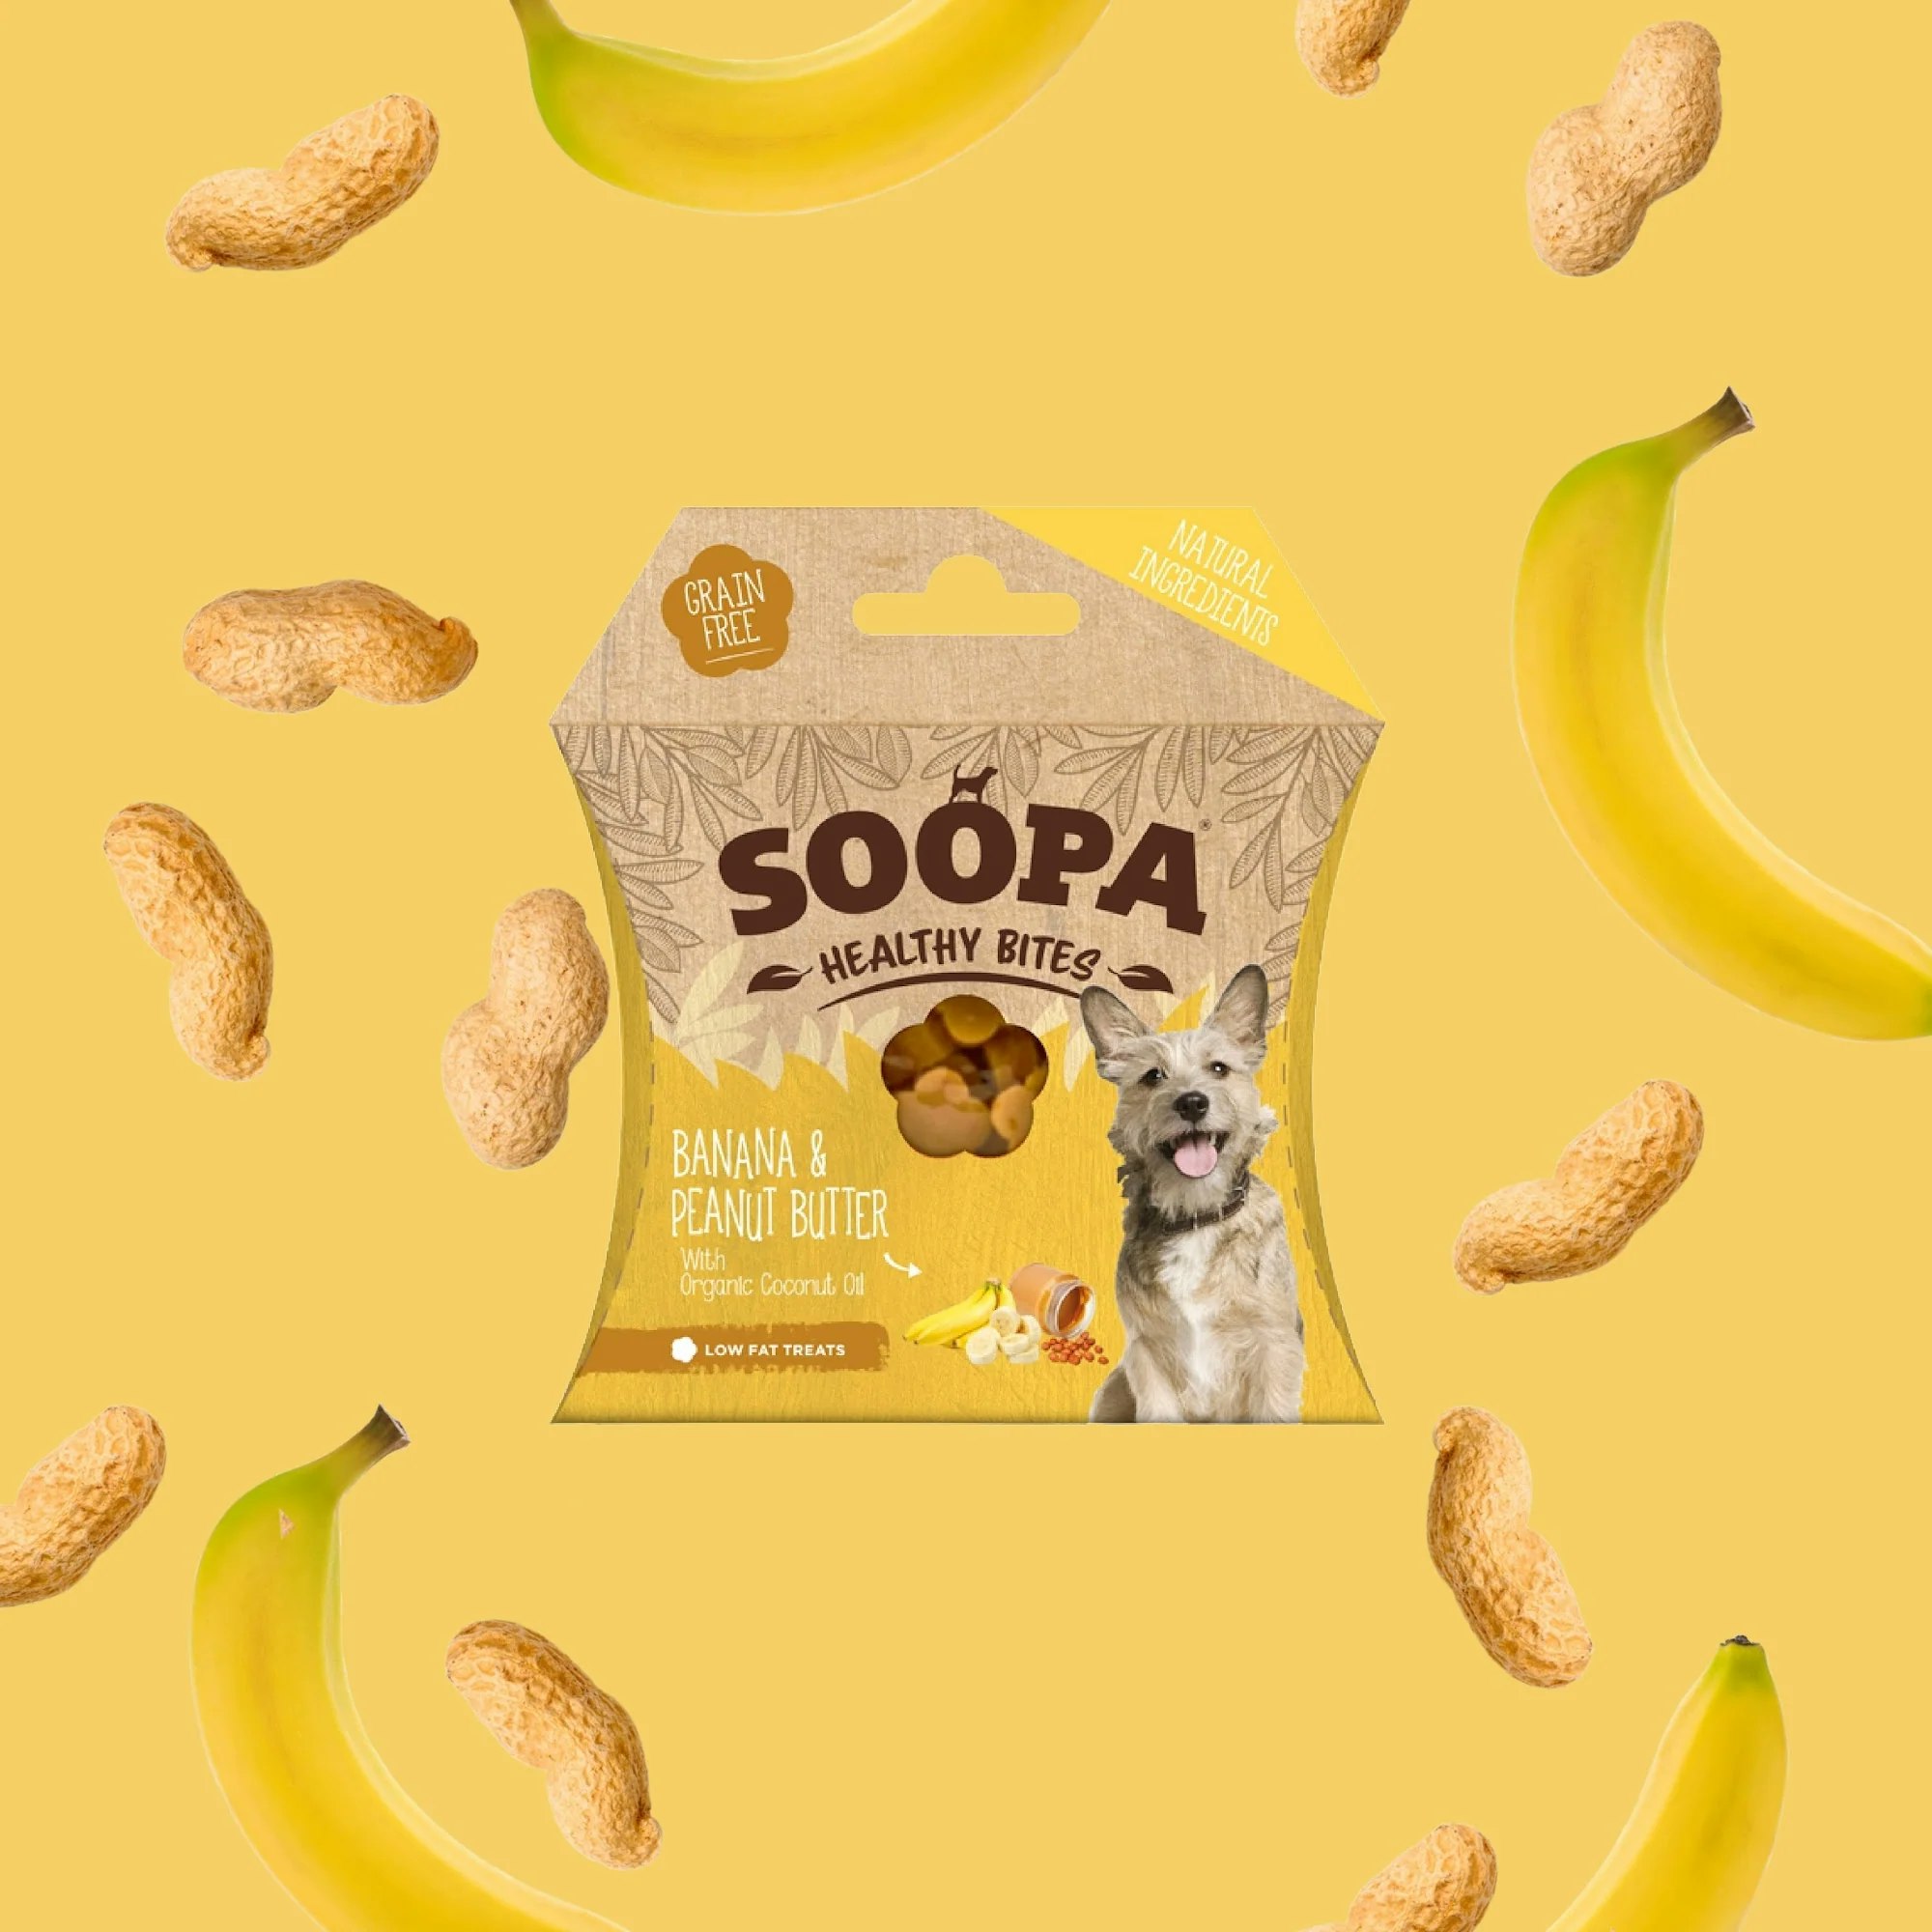 SOOPA Banana & Peanut Butter Healthy Bites